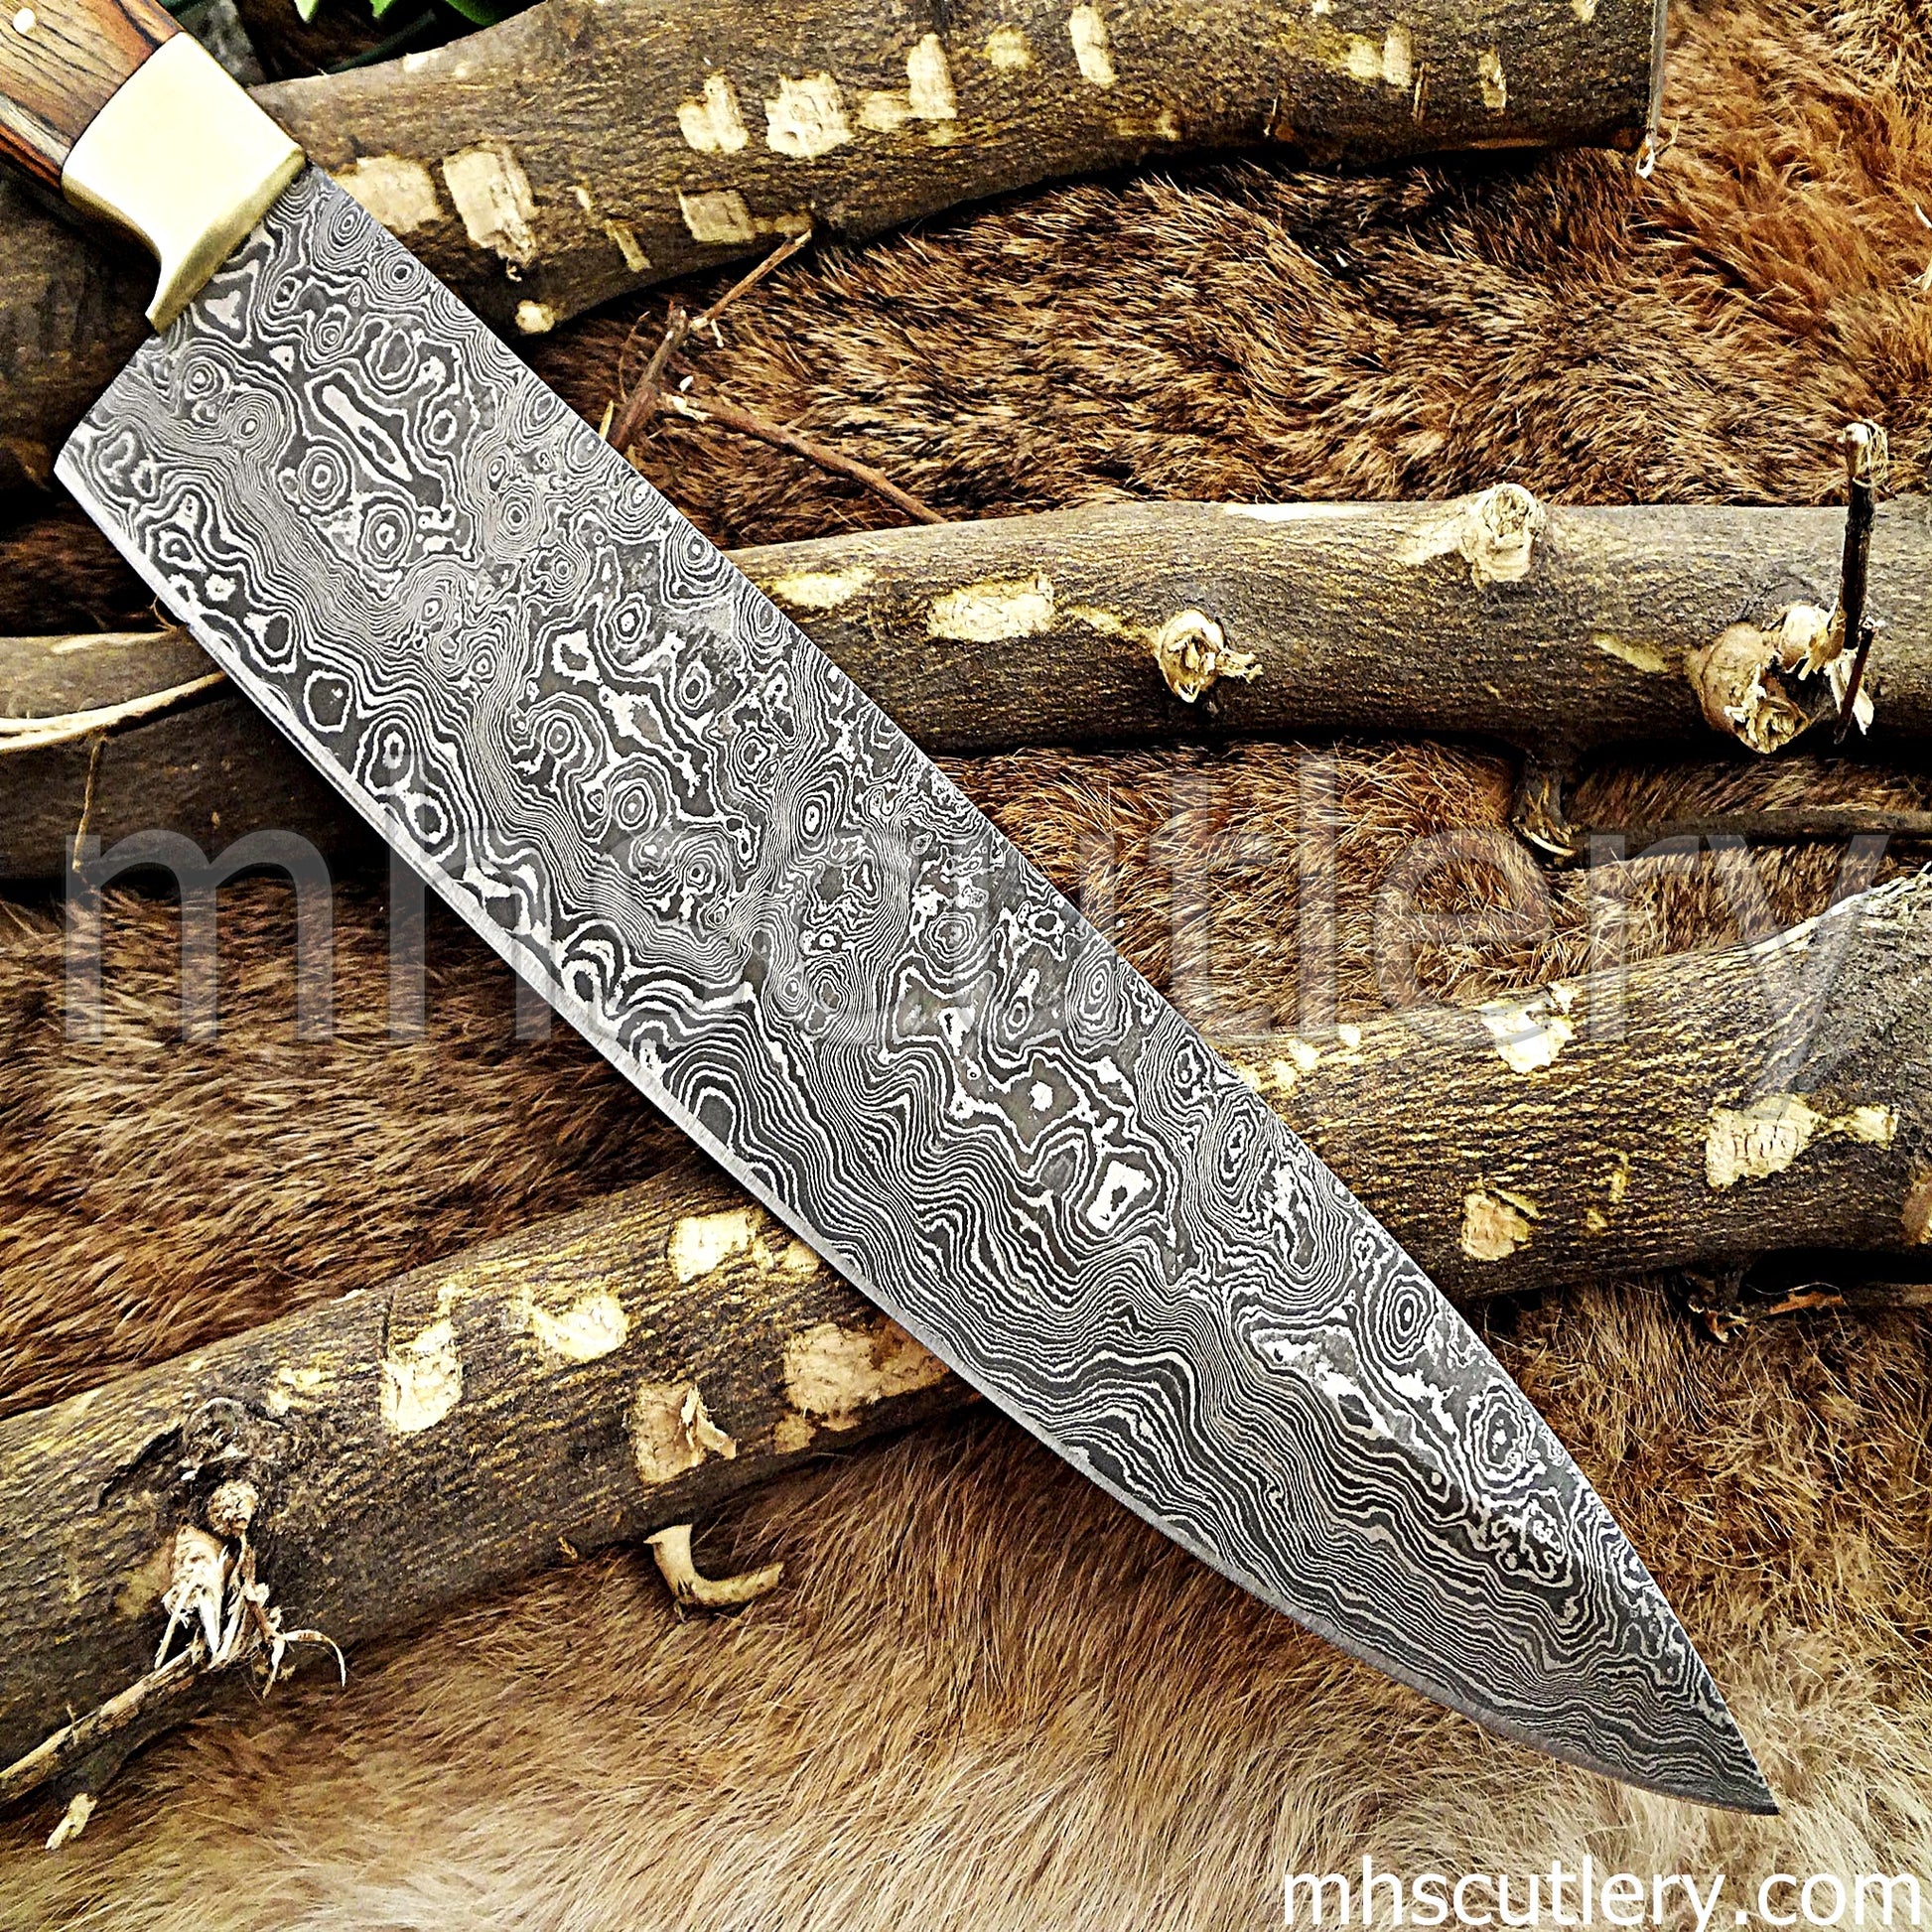 Custom Handmade Raindrop Damascus Steel Chef's Knife Knife | mhscutlery